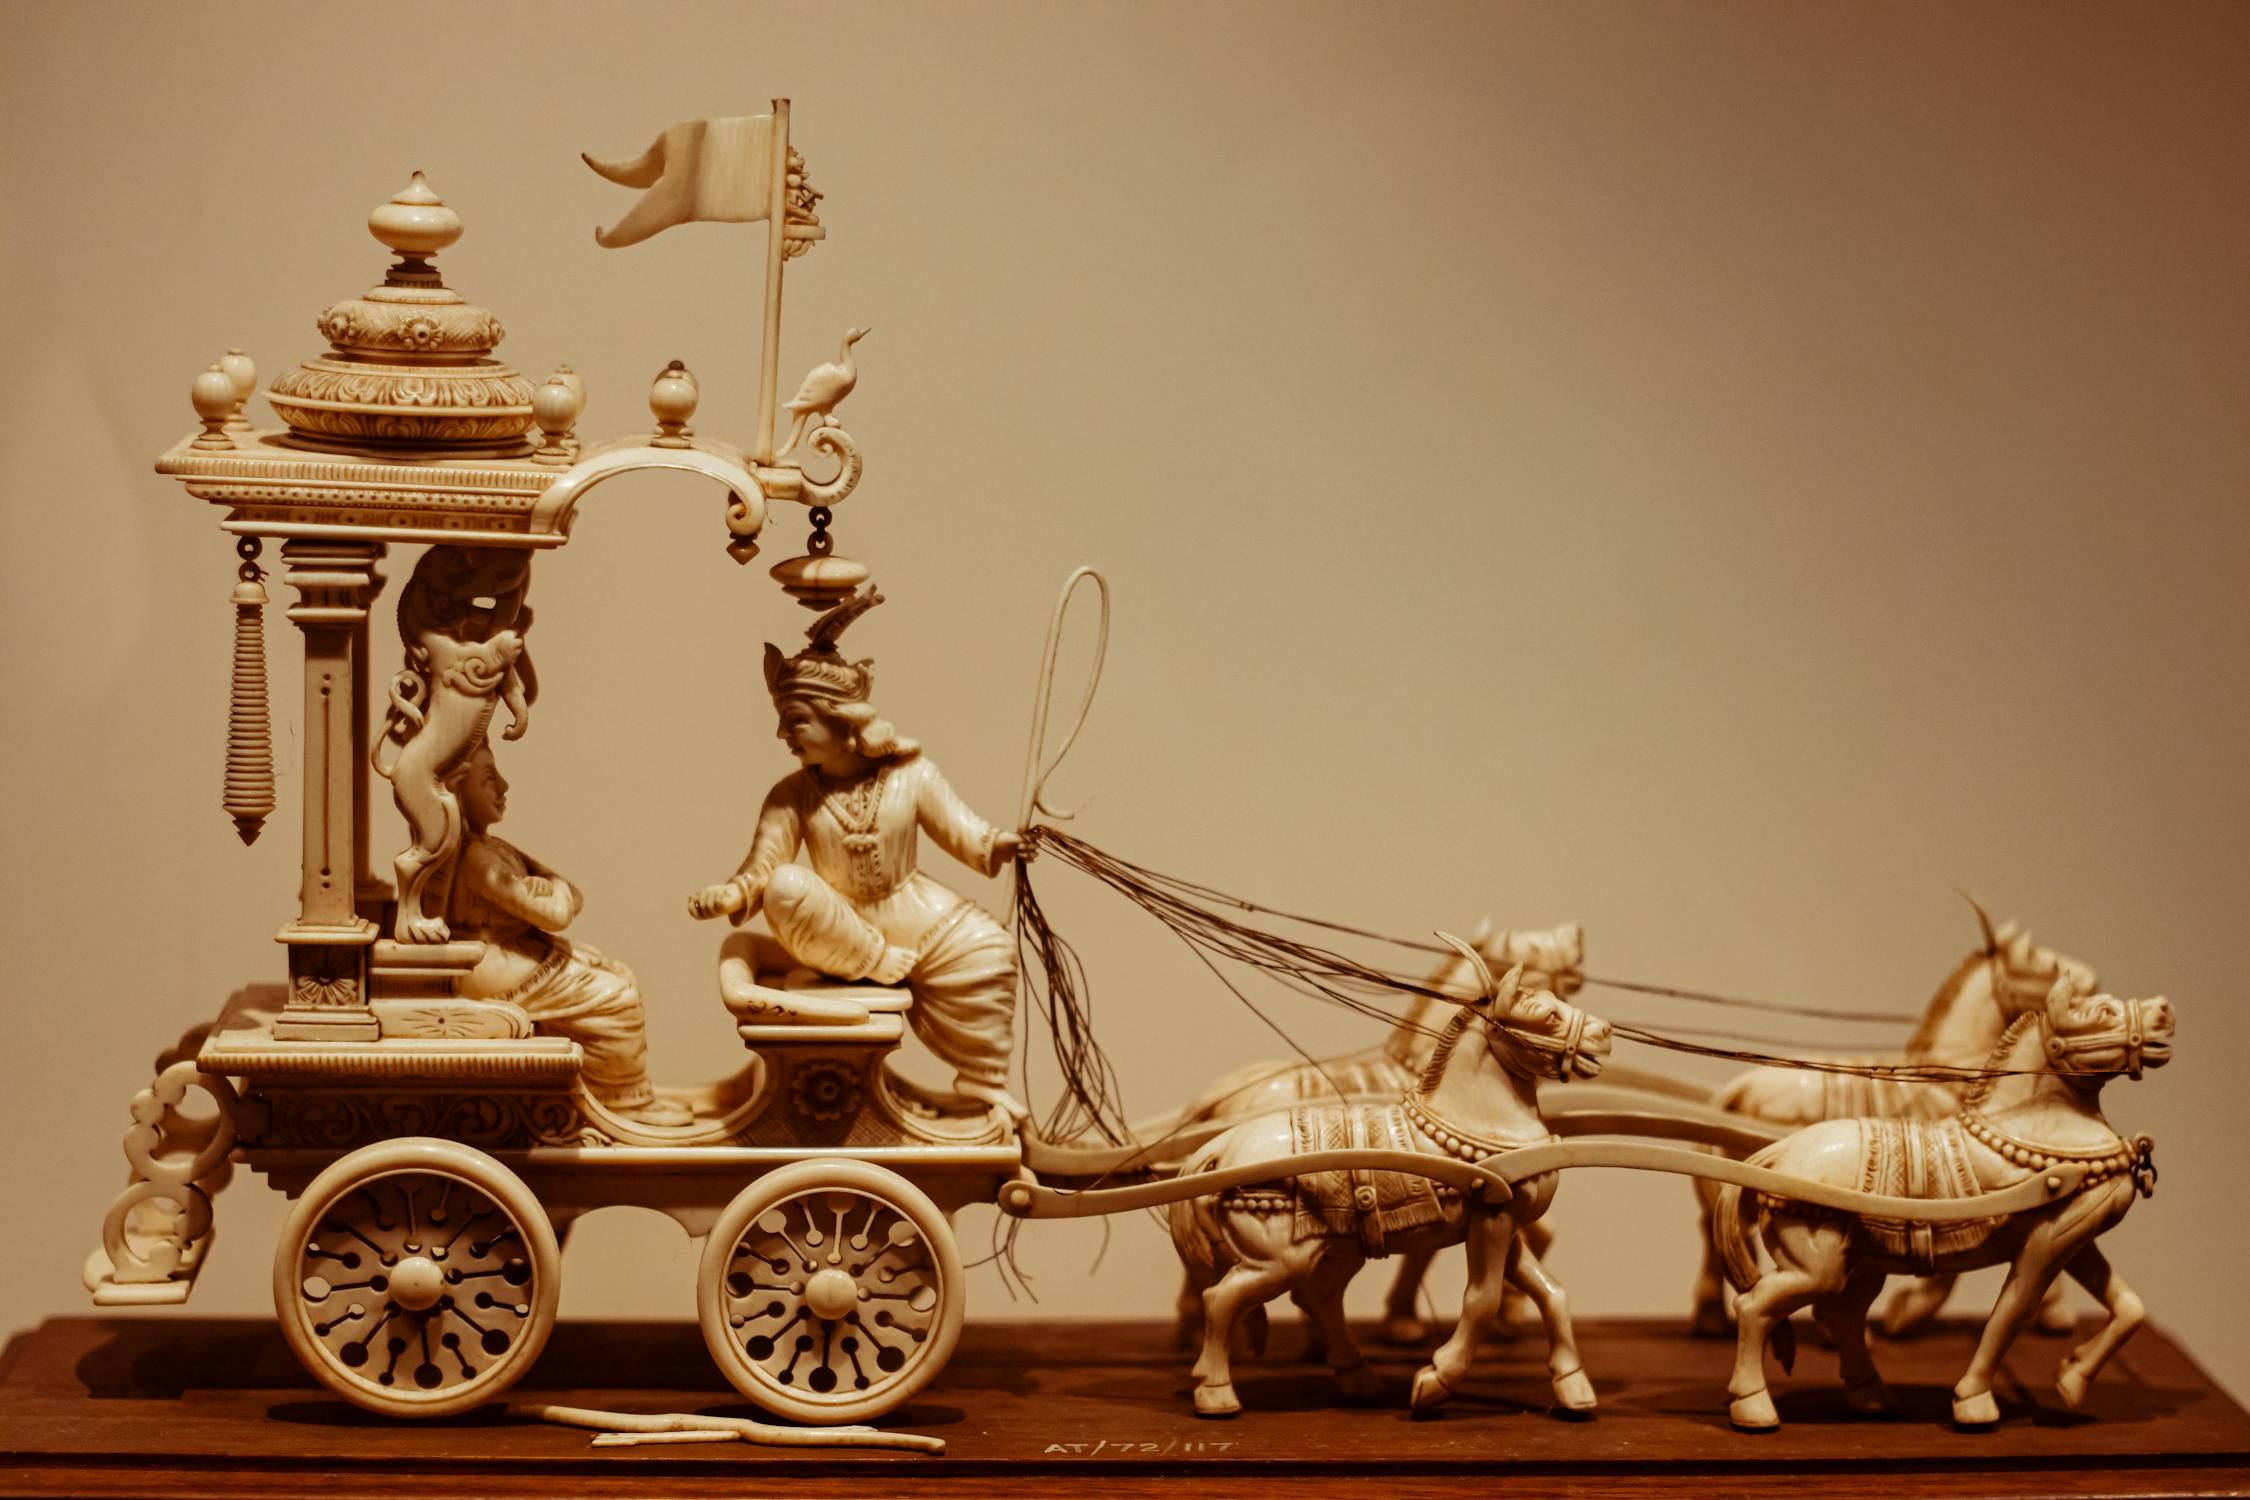 Bhagavat Geeta Photo by Ranjit Pradhan from Pexels: https://www.pexels.com/photo/a-chariot-figurine-12520328/